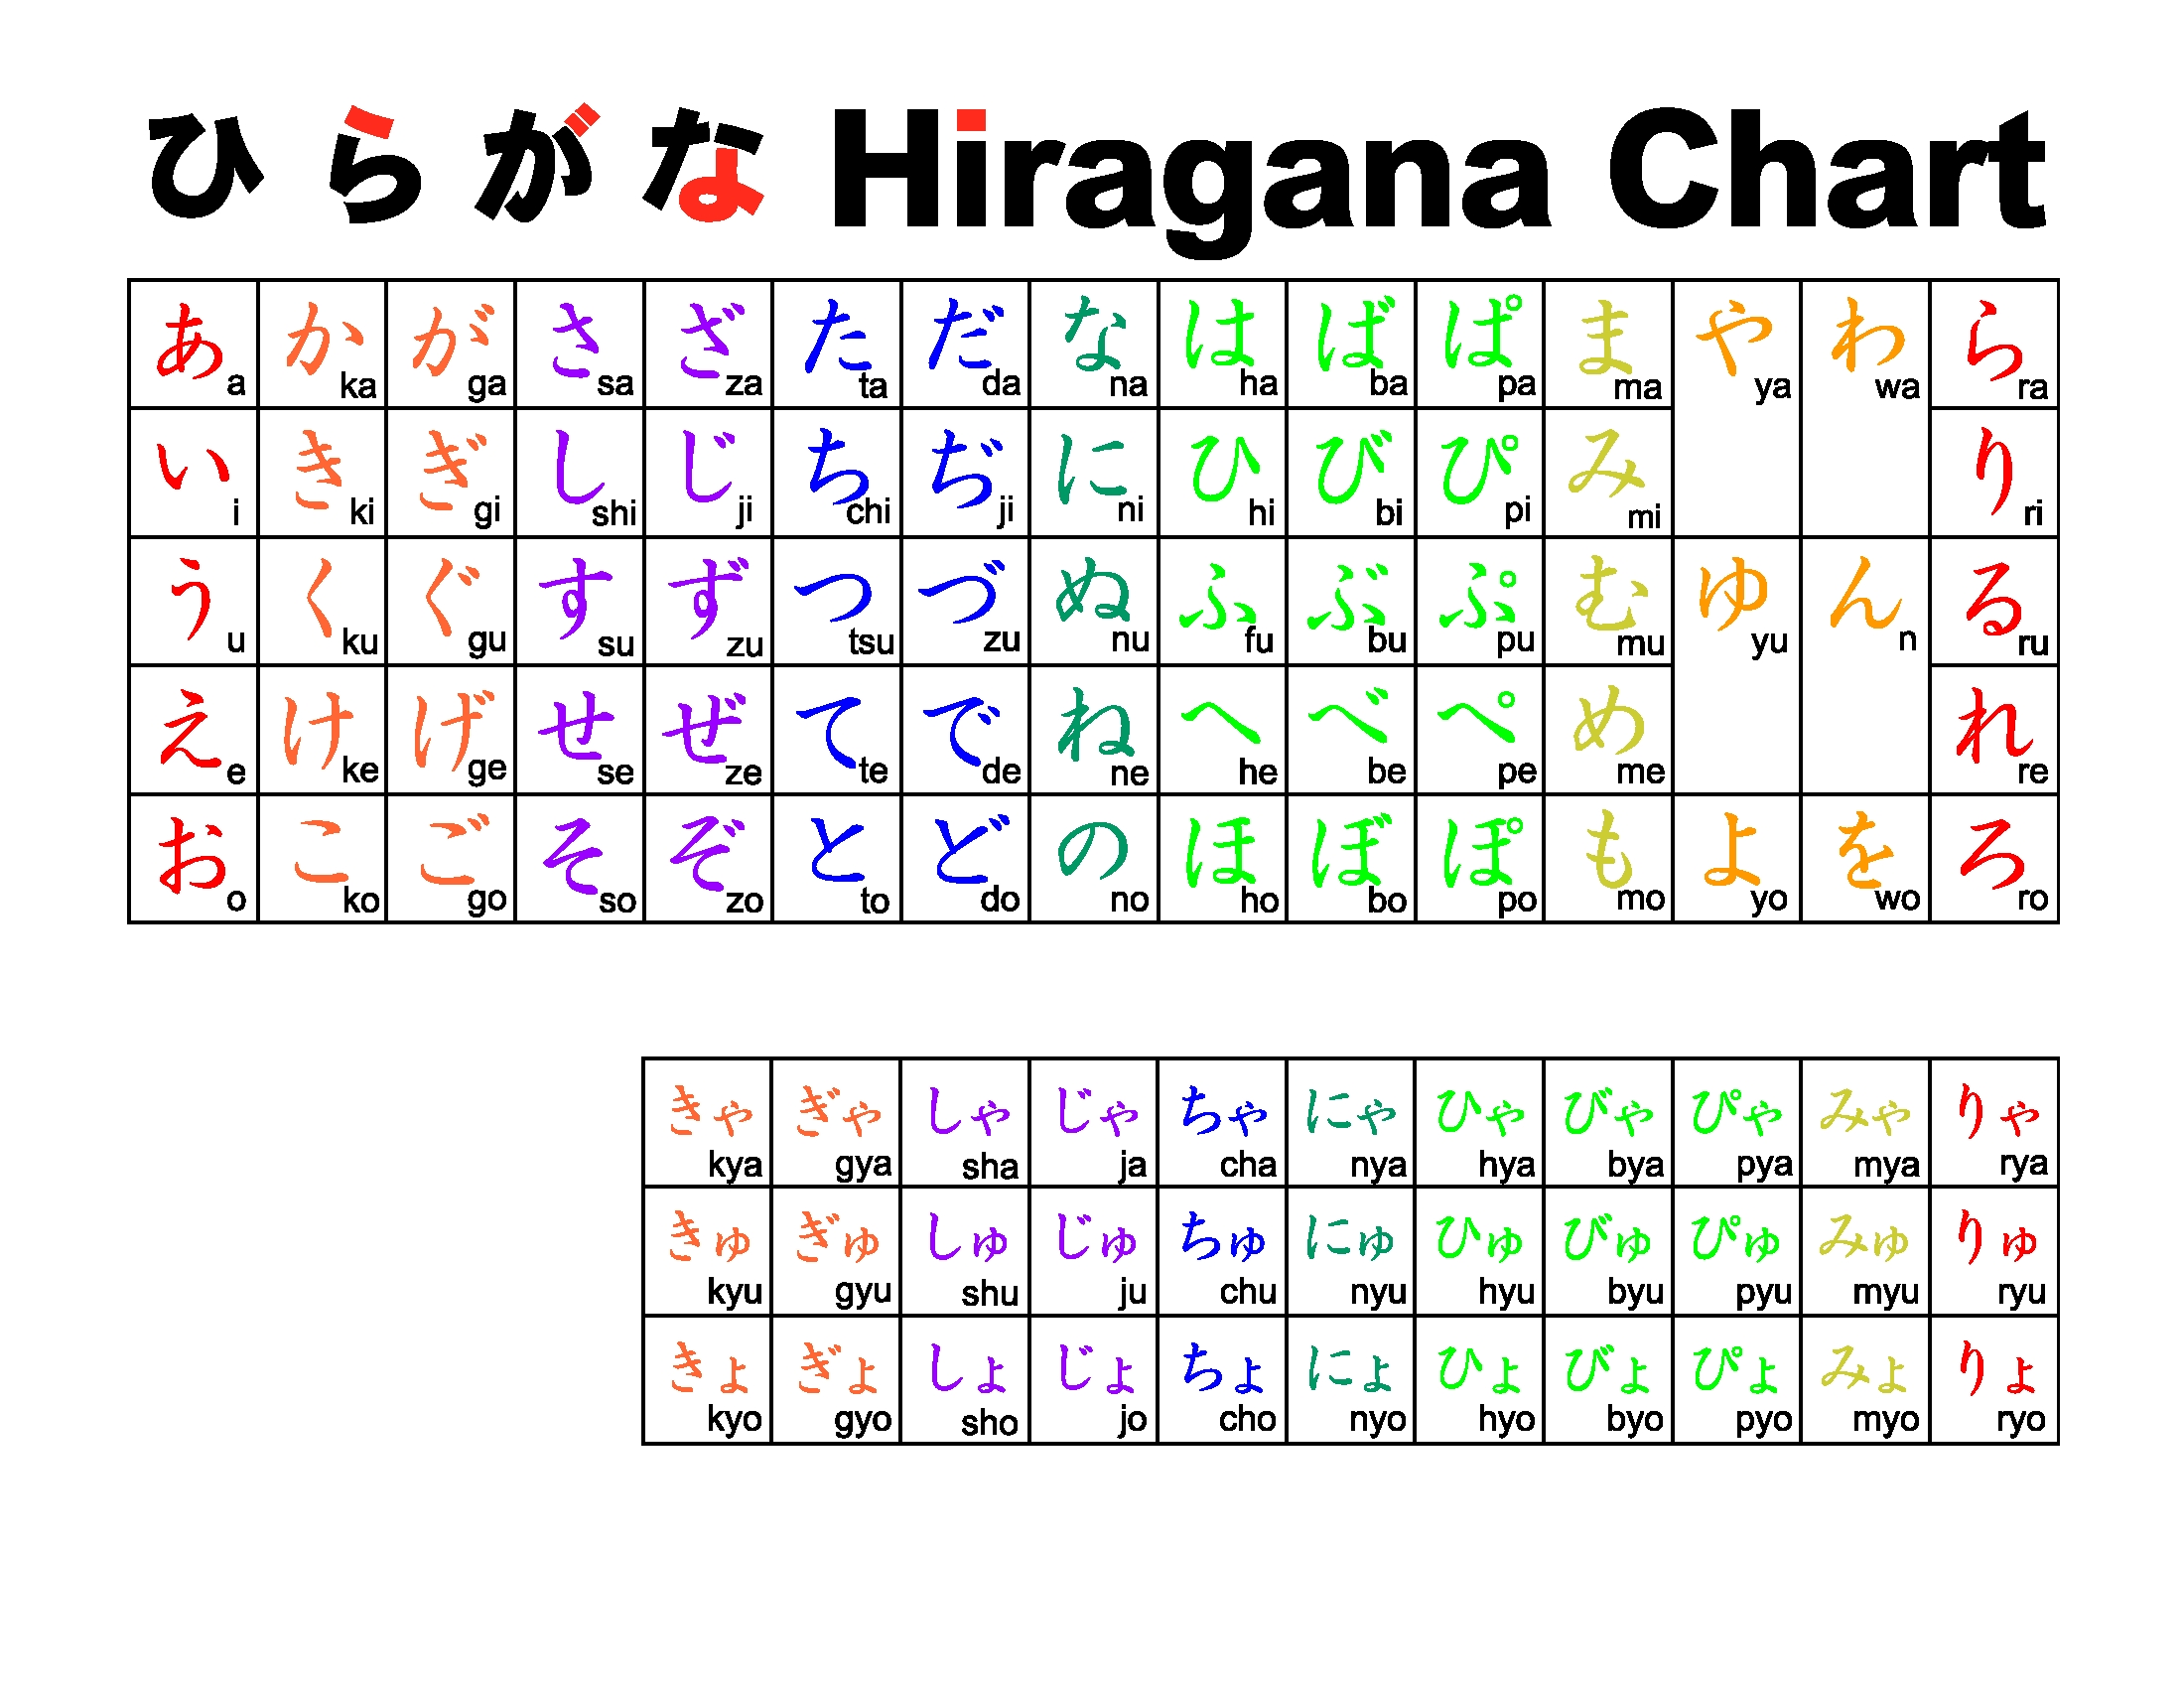 Japanese Alphabet | Know-It-All
